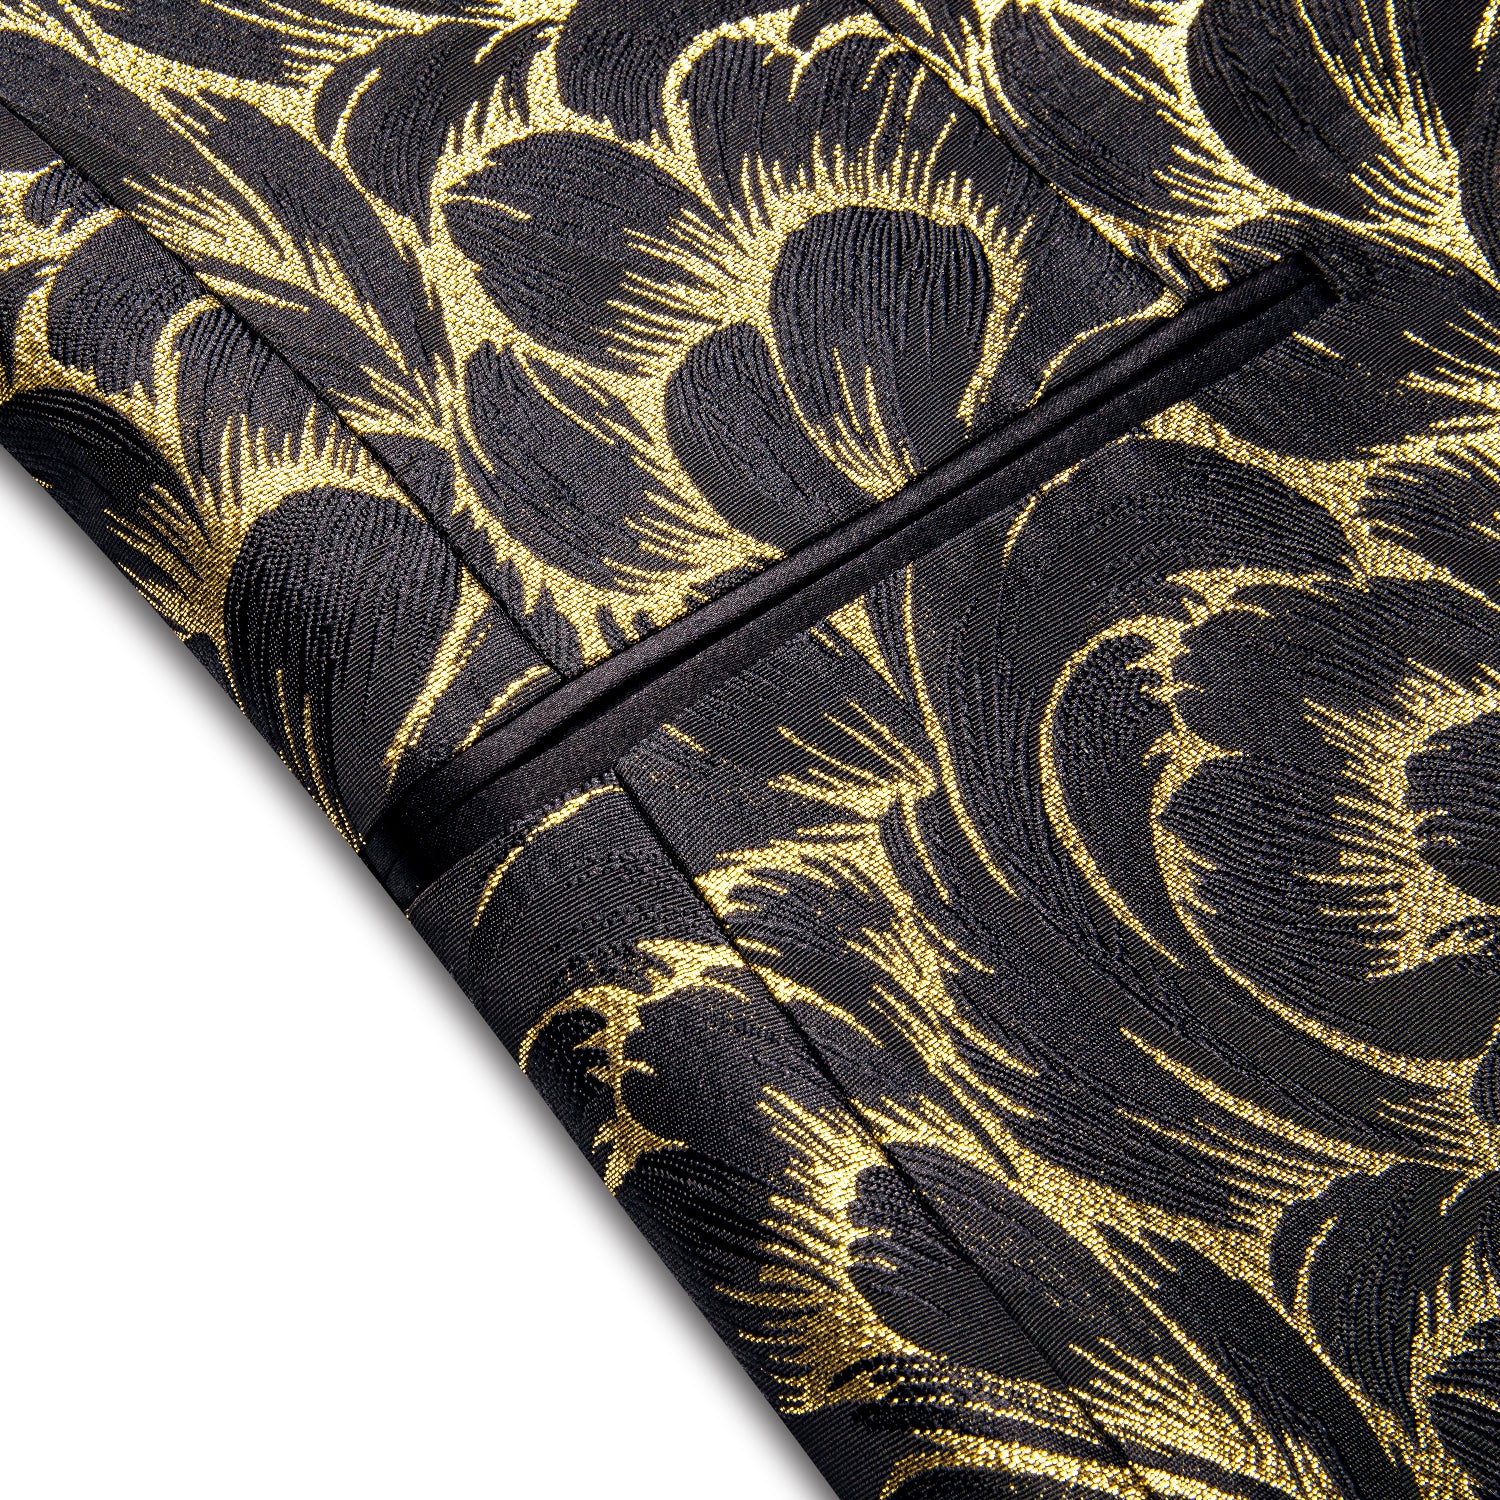 New Luxury Black Gold Feather Men's Suit Set